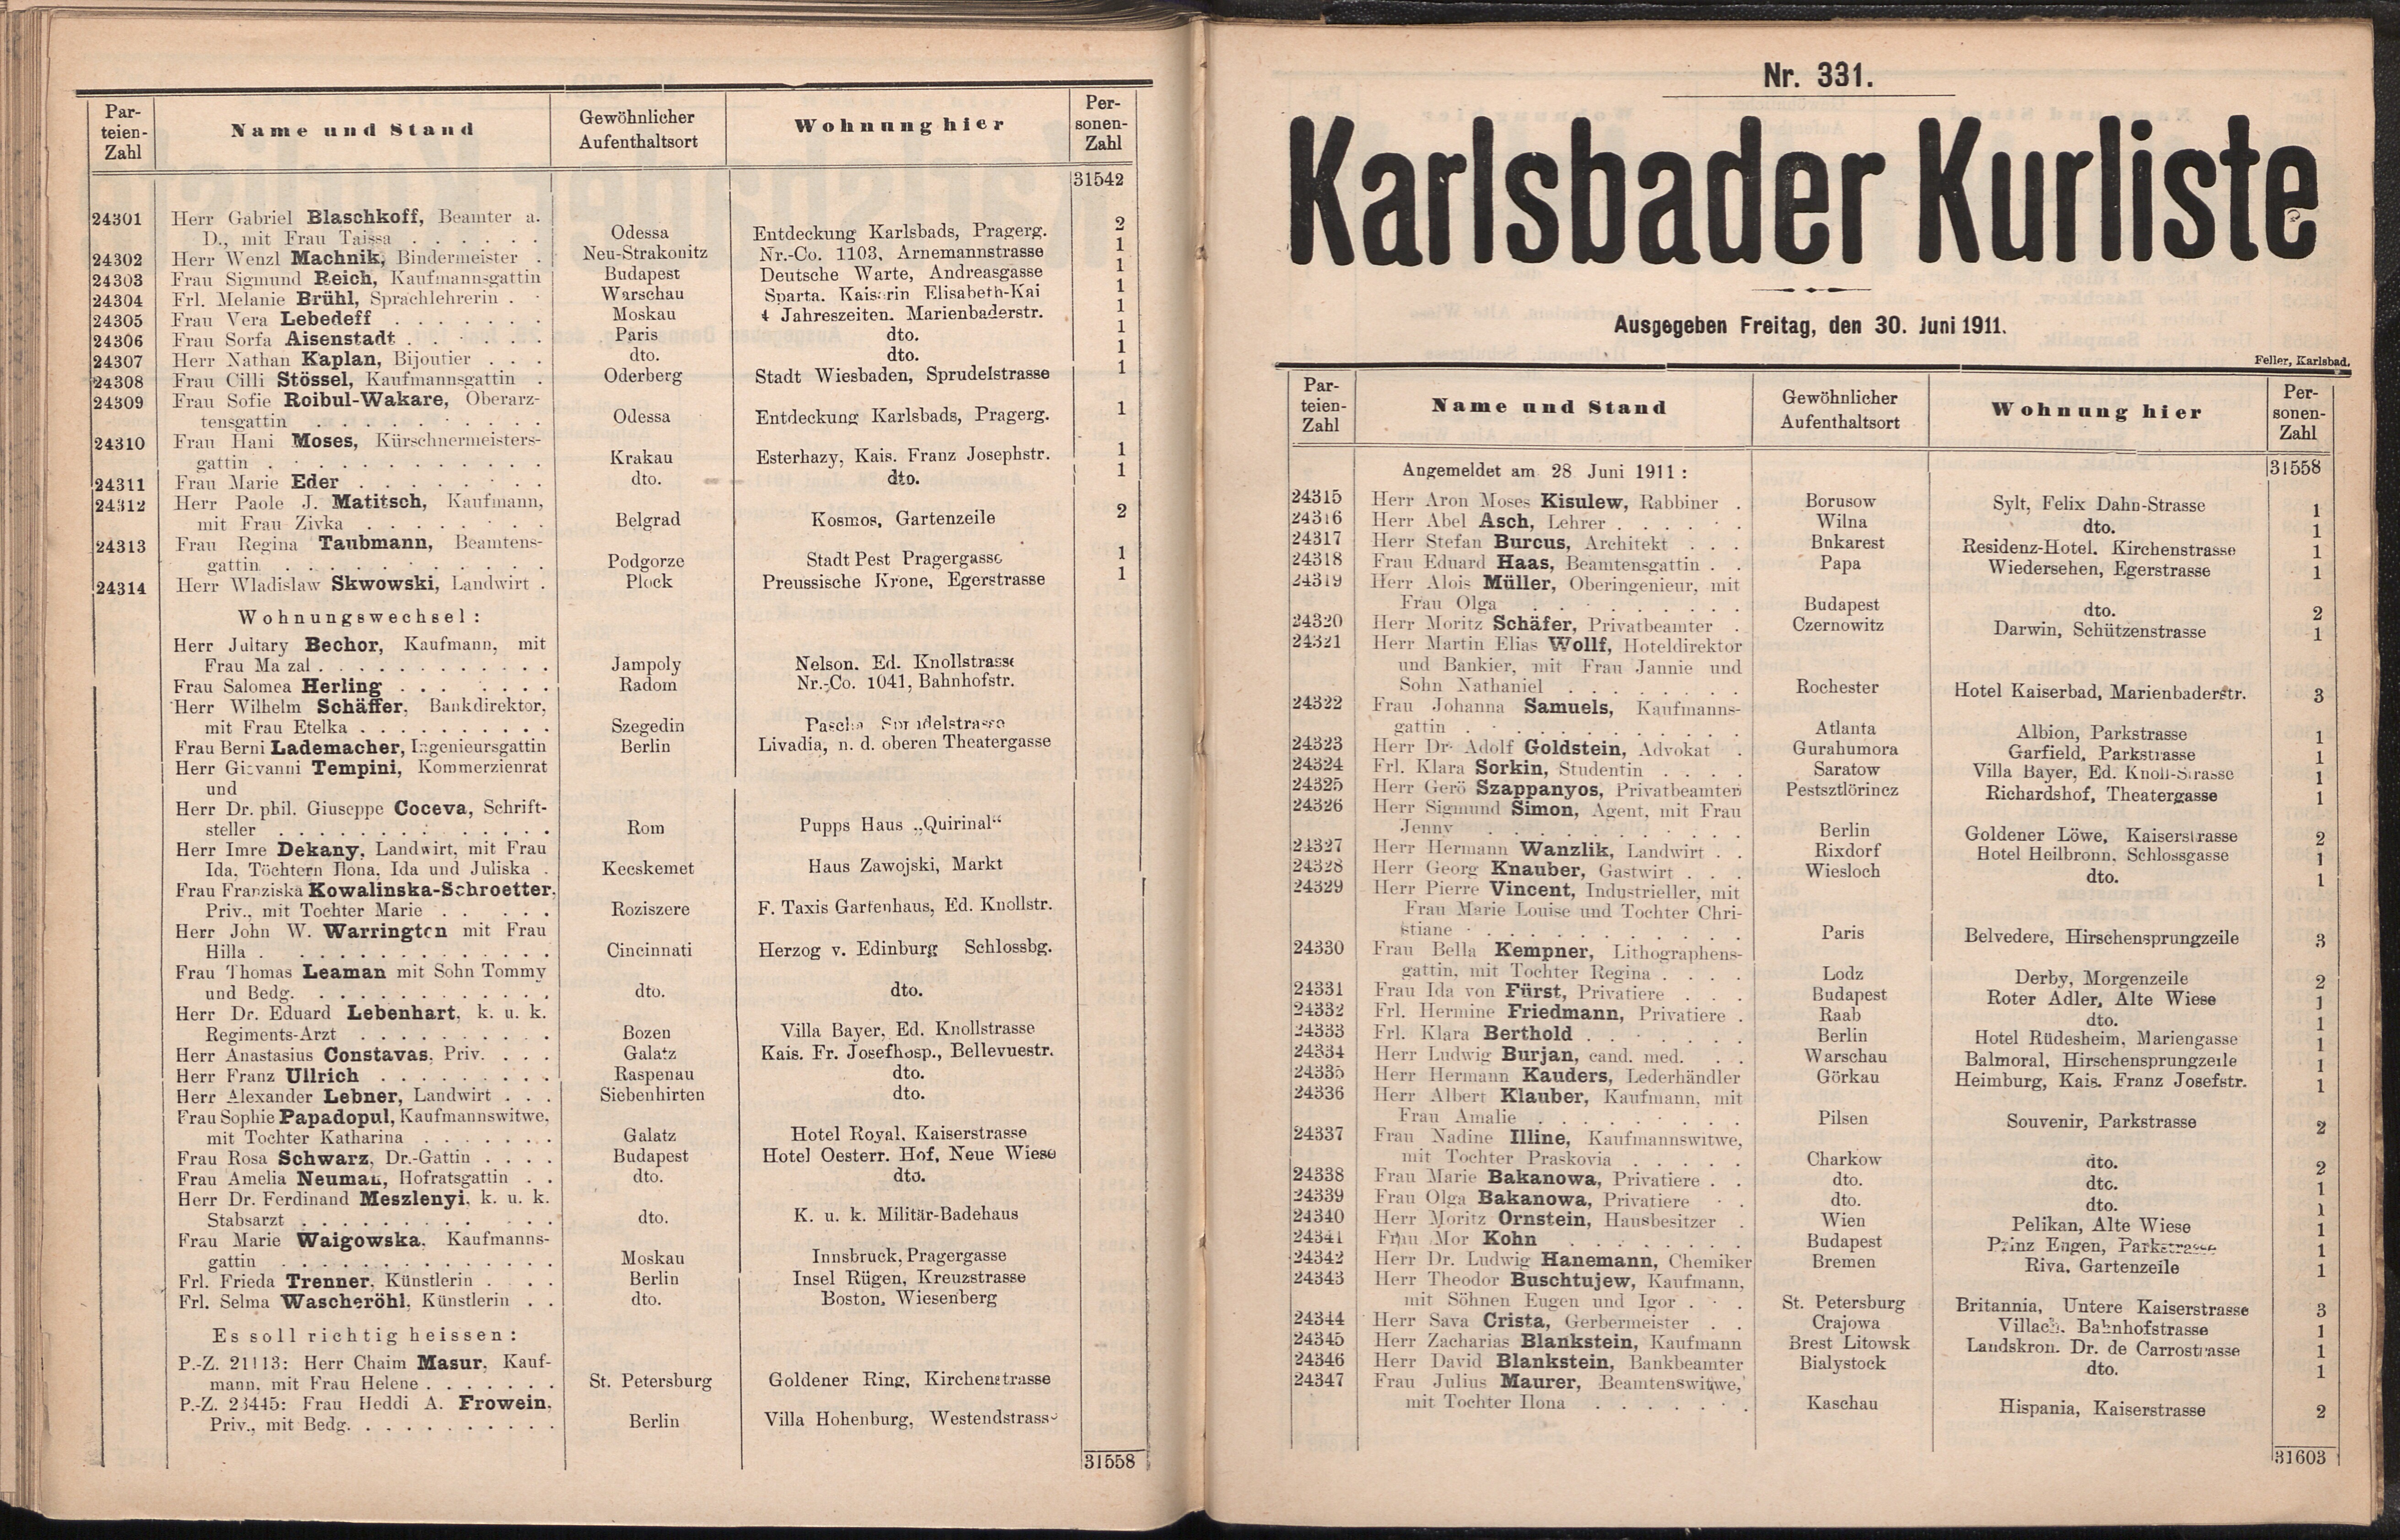 434. soap-kv_knihovna_karlsbader-kurliste-1911-1_4350